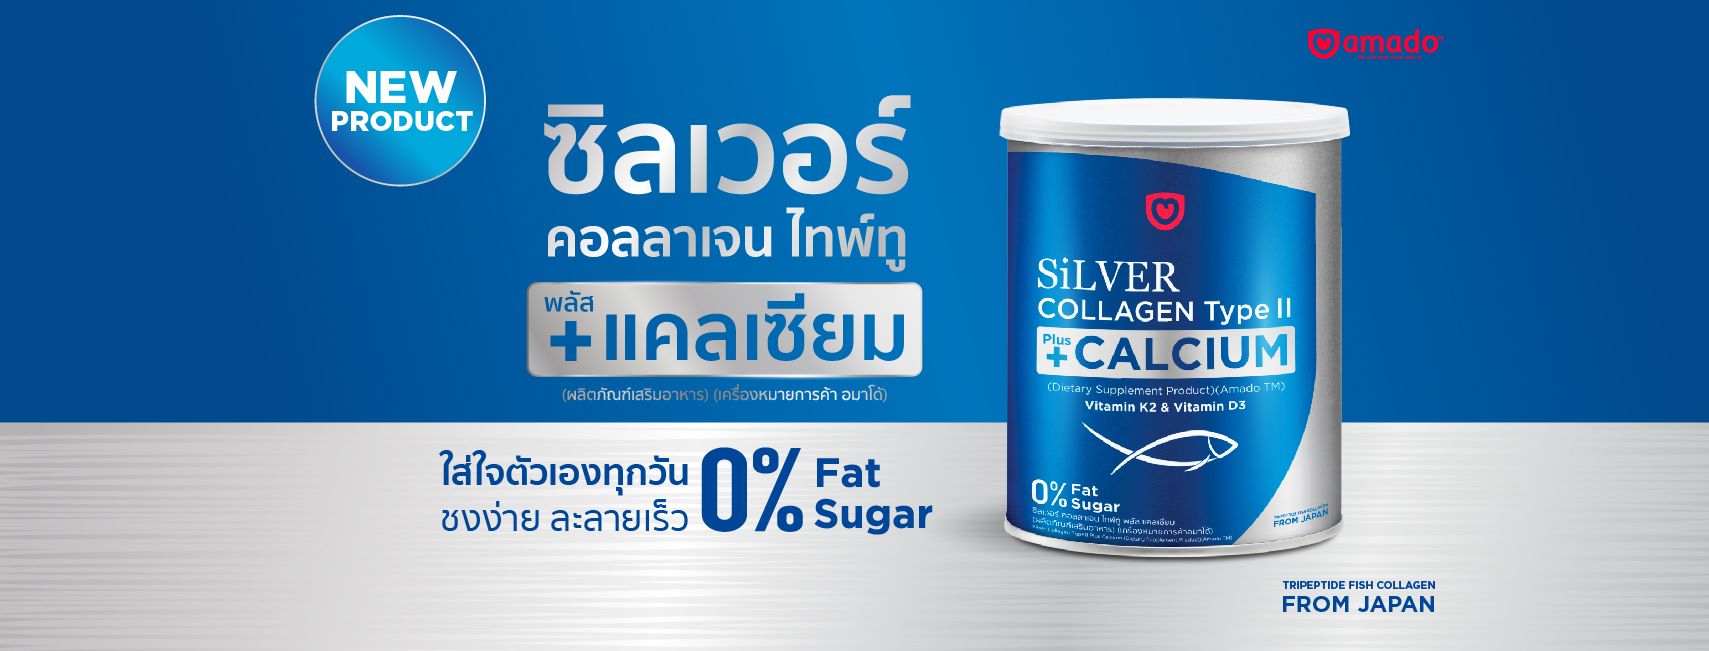 Amado Silver Collagen Type II + Calcium